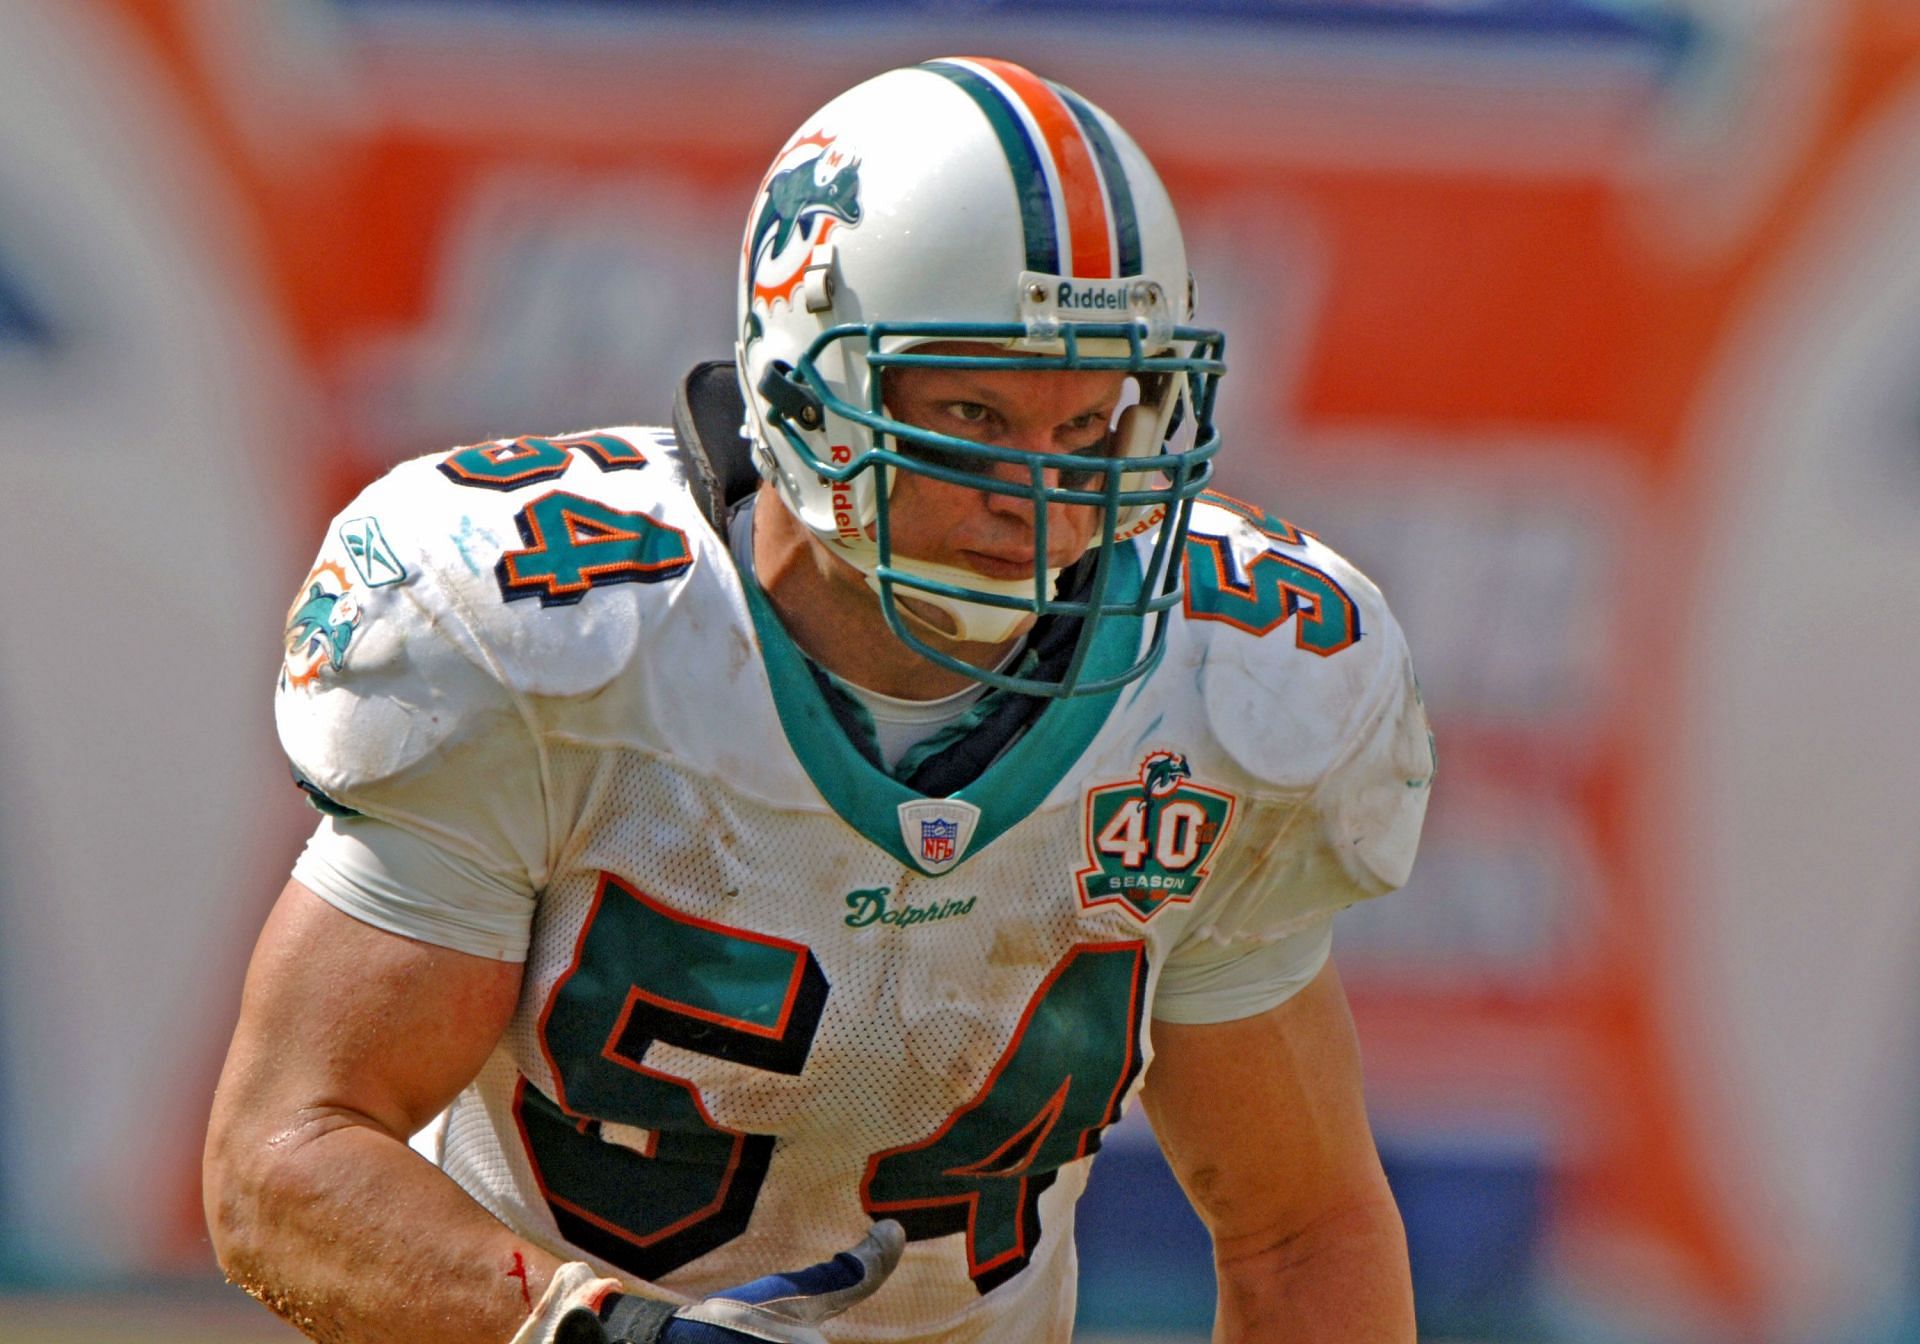 Miami Dolphins linebacker Zach Thomas